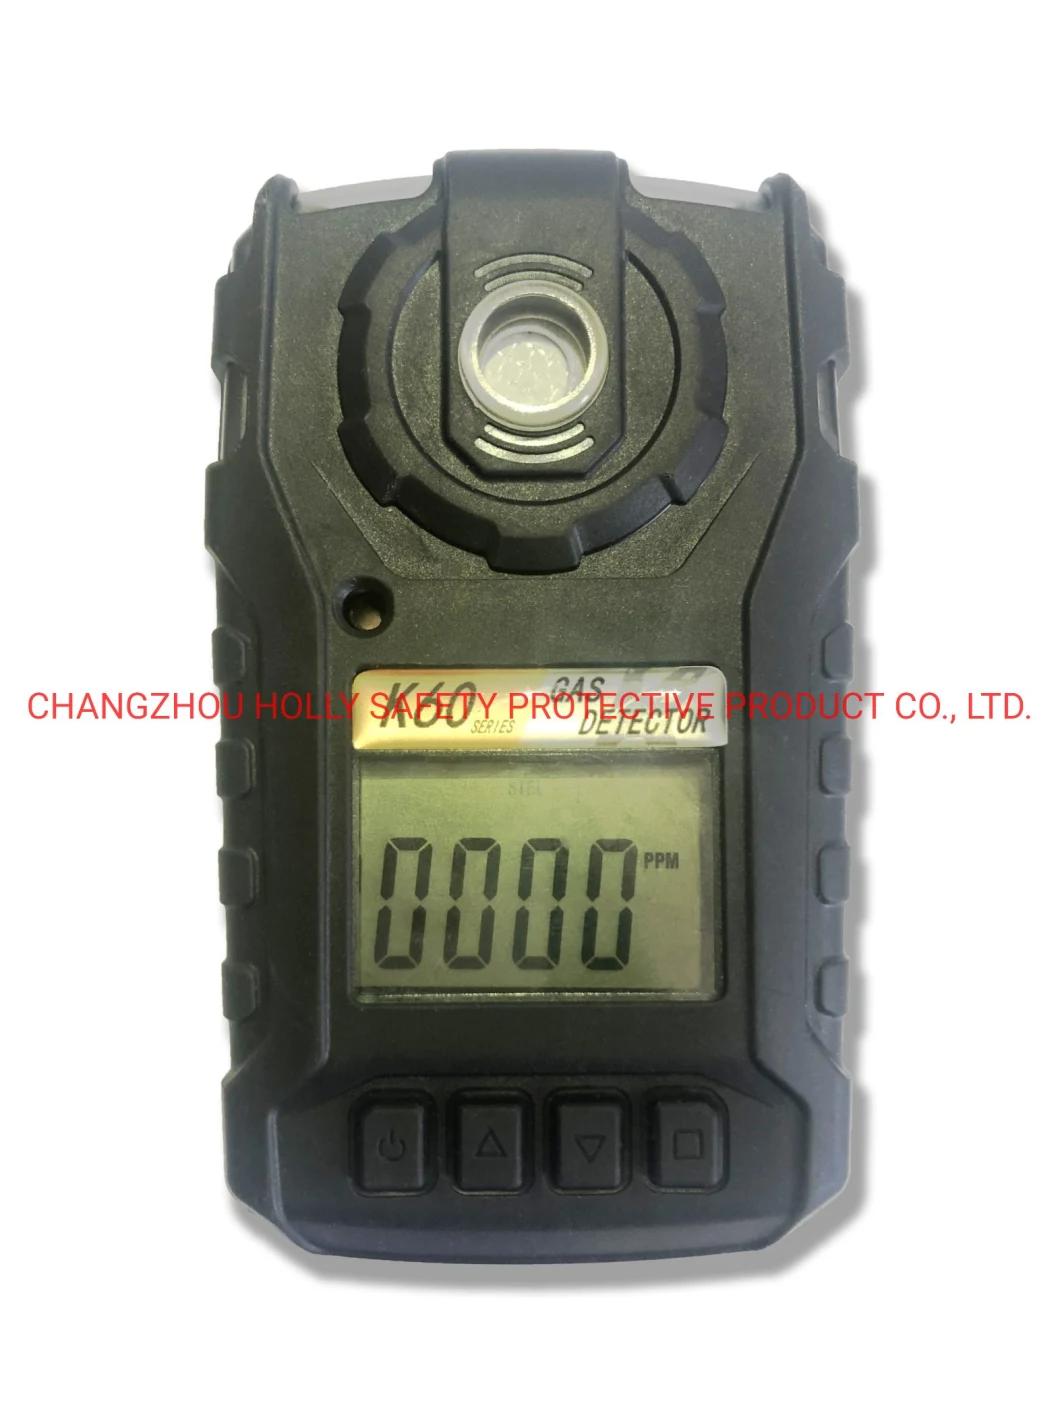 CE Certificate Portable Gas Detector/Analyzer